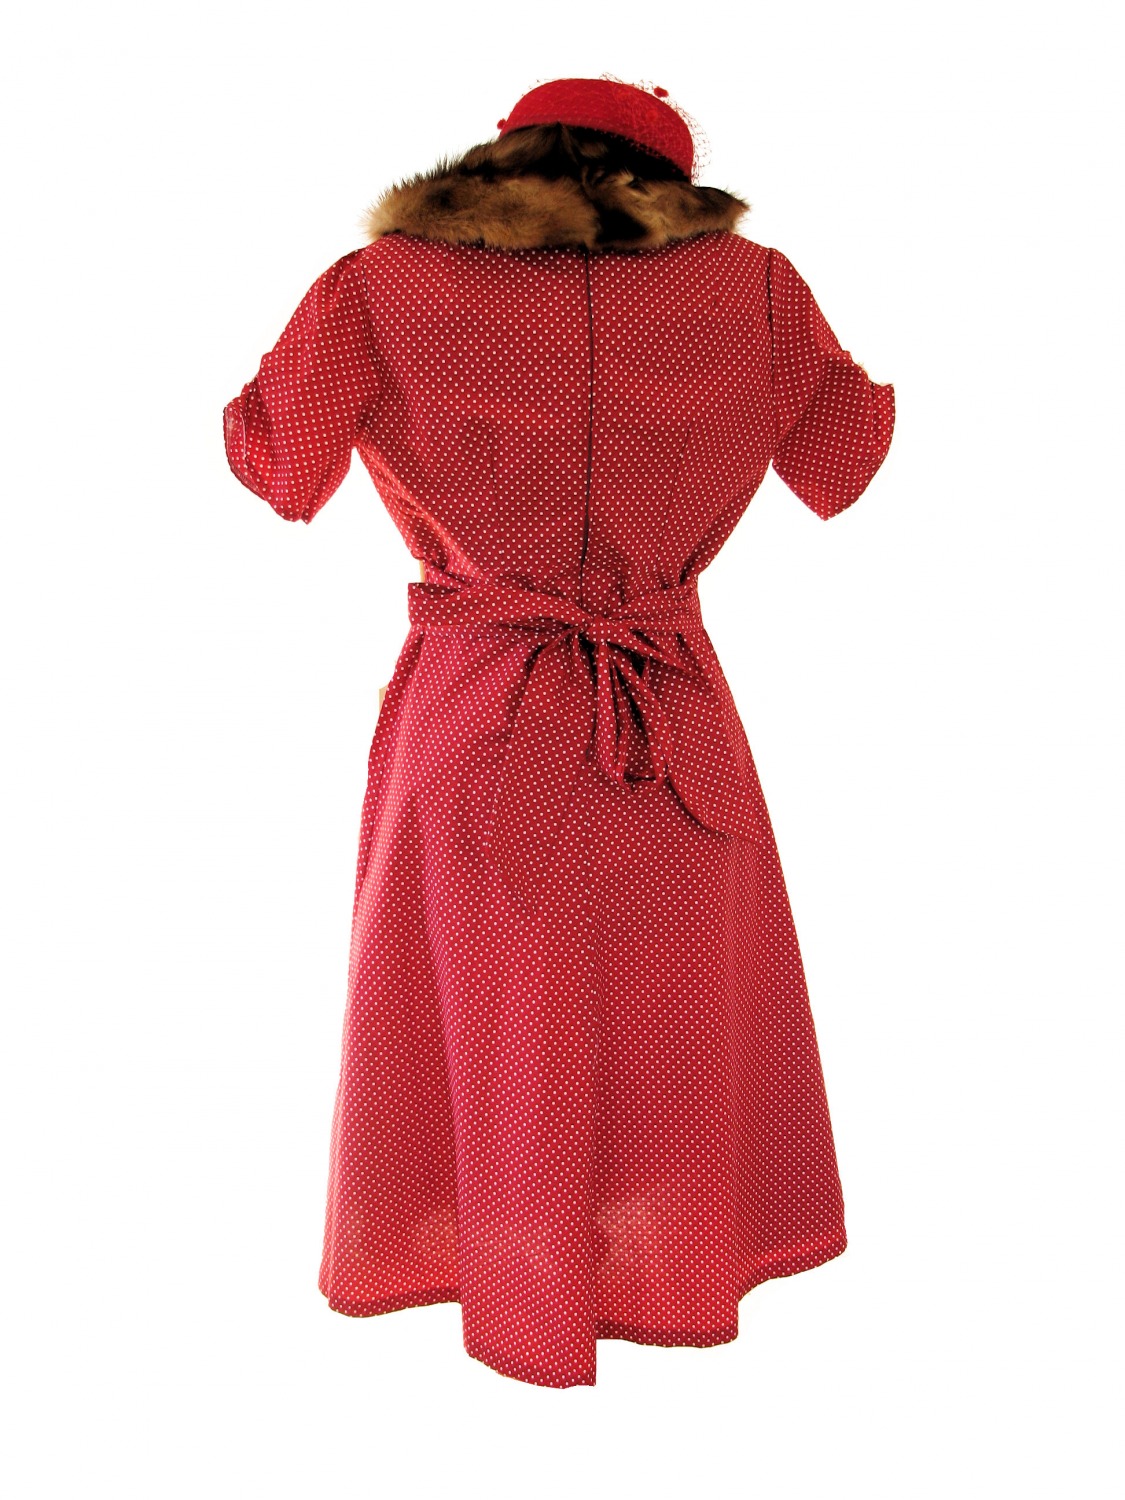 Ladies 1940's Style Tea Dress Wartime Goodwood Costume Size 14 - 16  Image